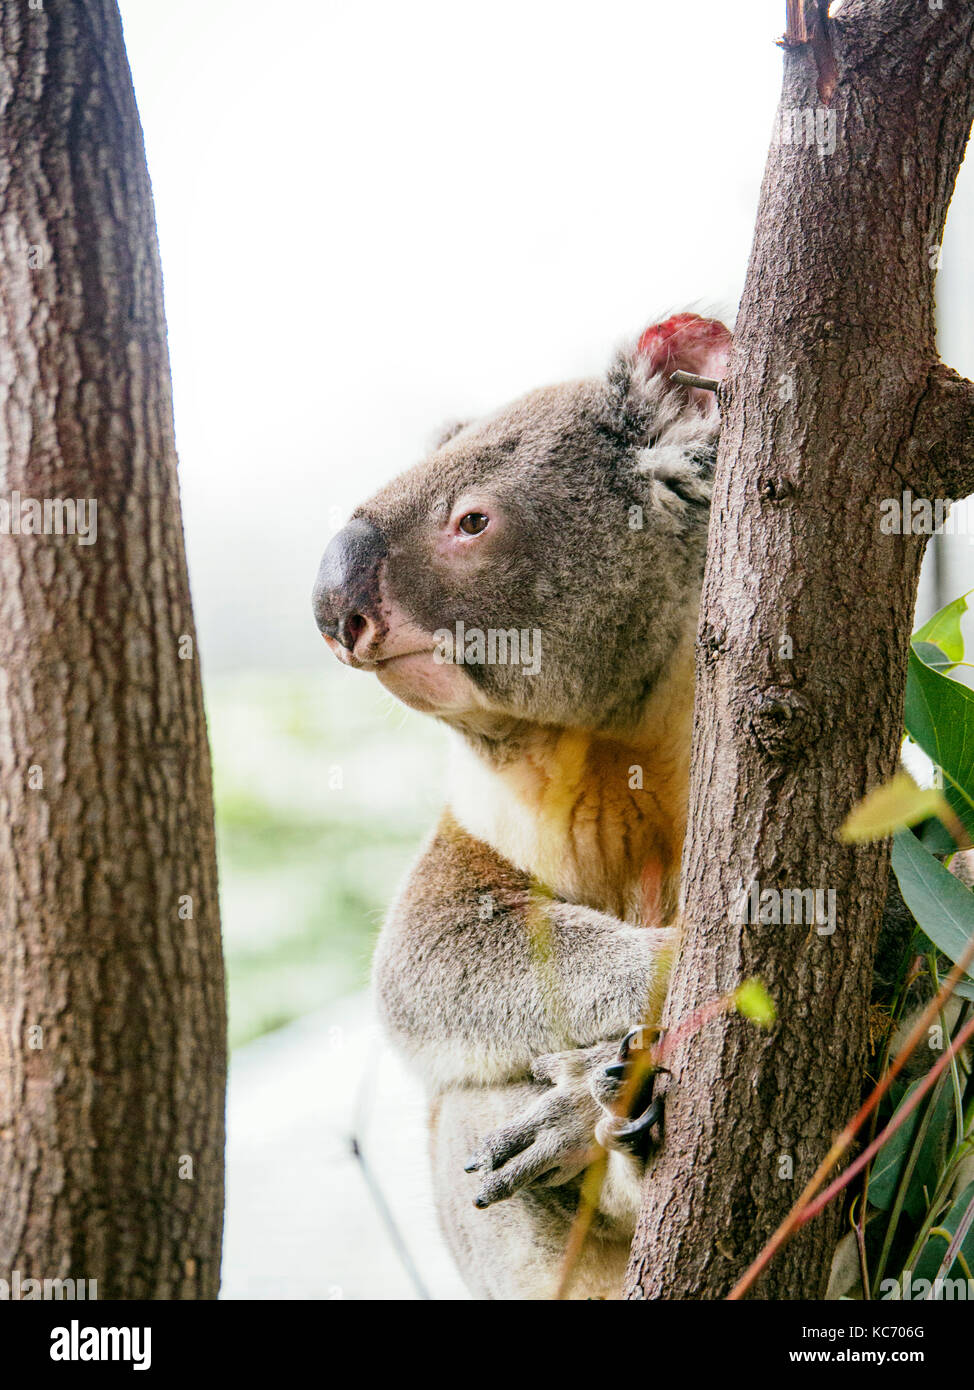 Koala (Marsupial) on tree Stock Photo